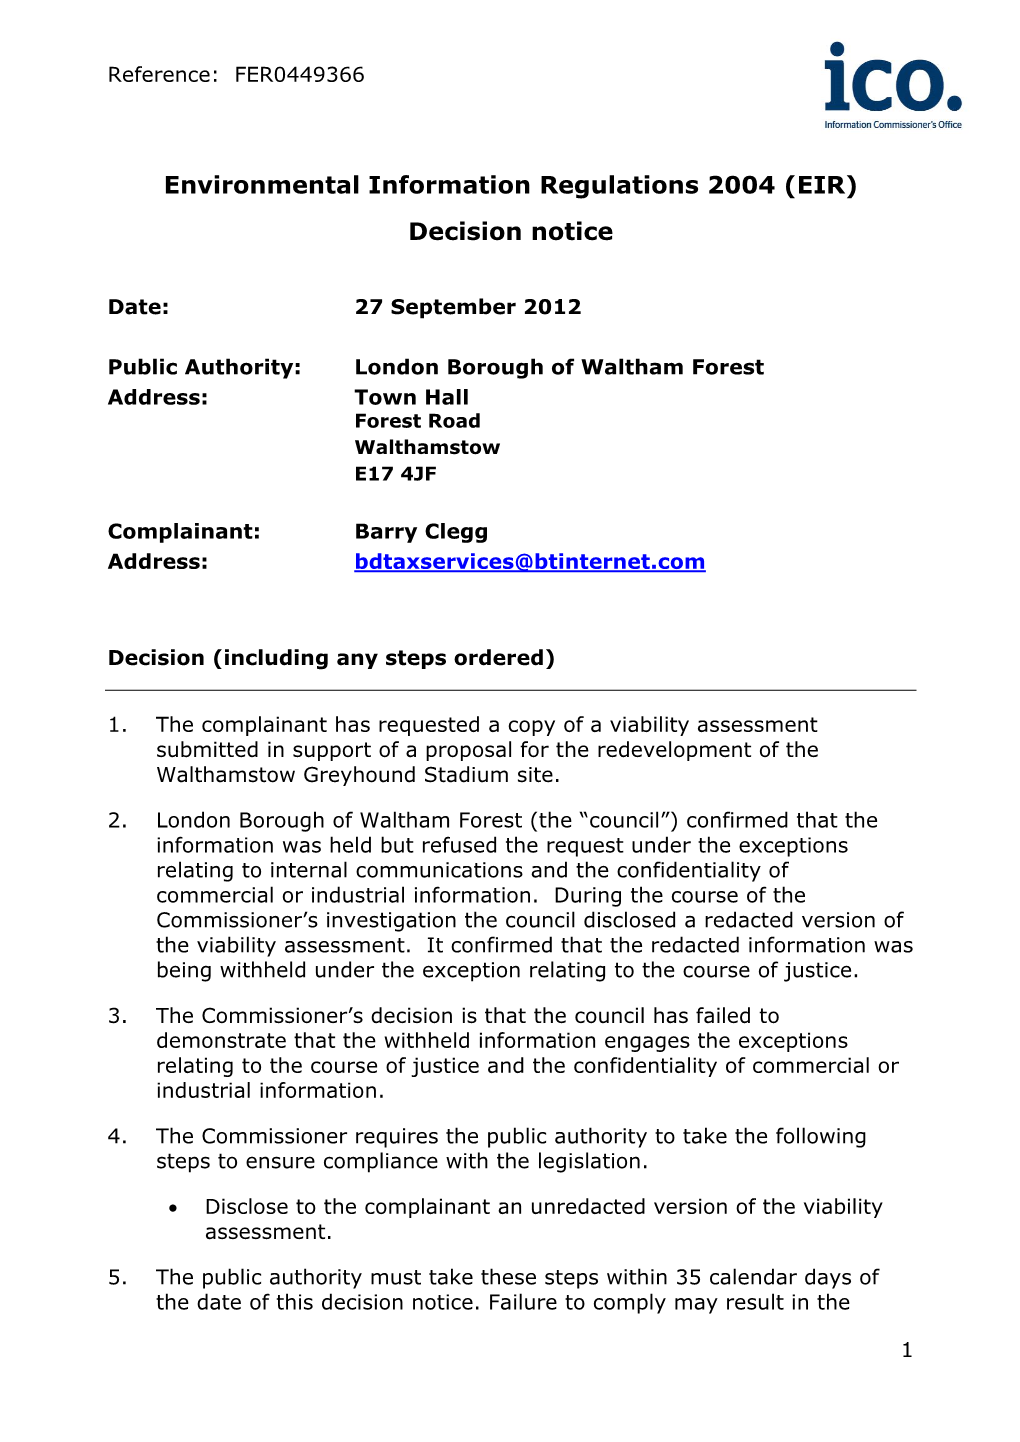 Environmental Information Regulations 2004 (EIR) Decision Notice